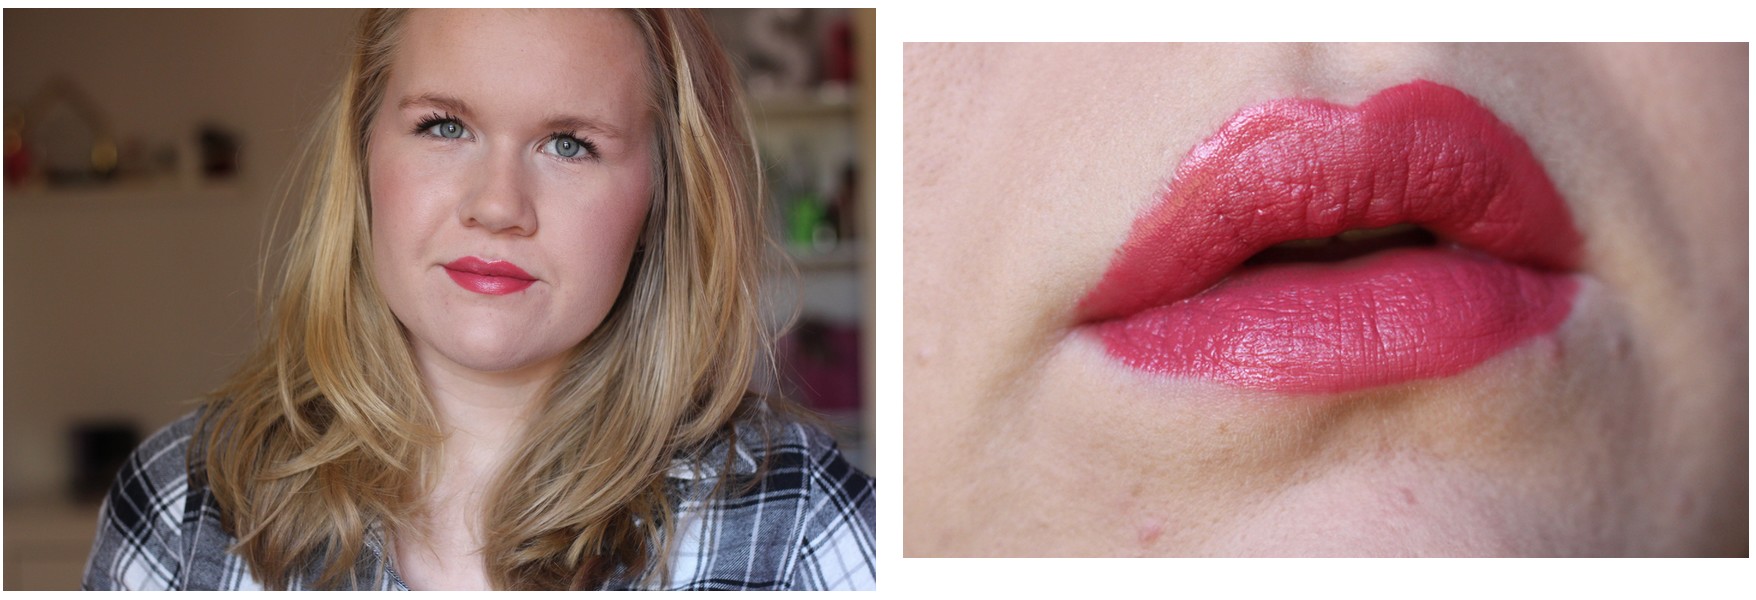 L'Oreal Lip Paint Lacquer 103 Fuchsia Wars en 102 Darling Pink